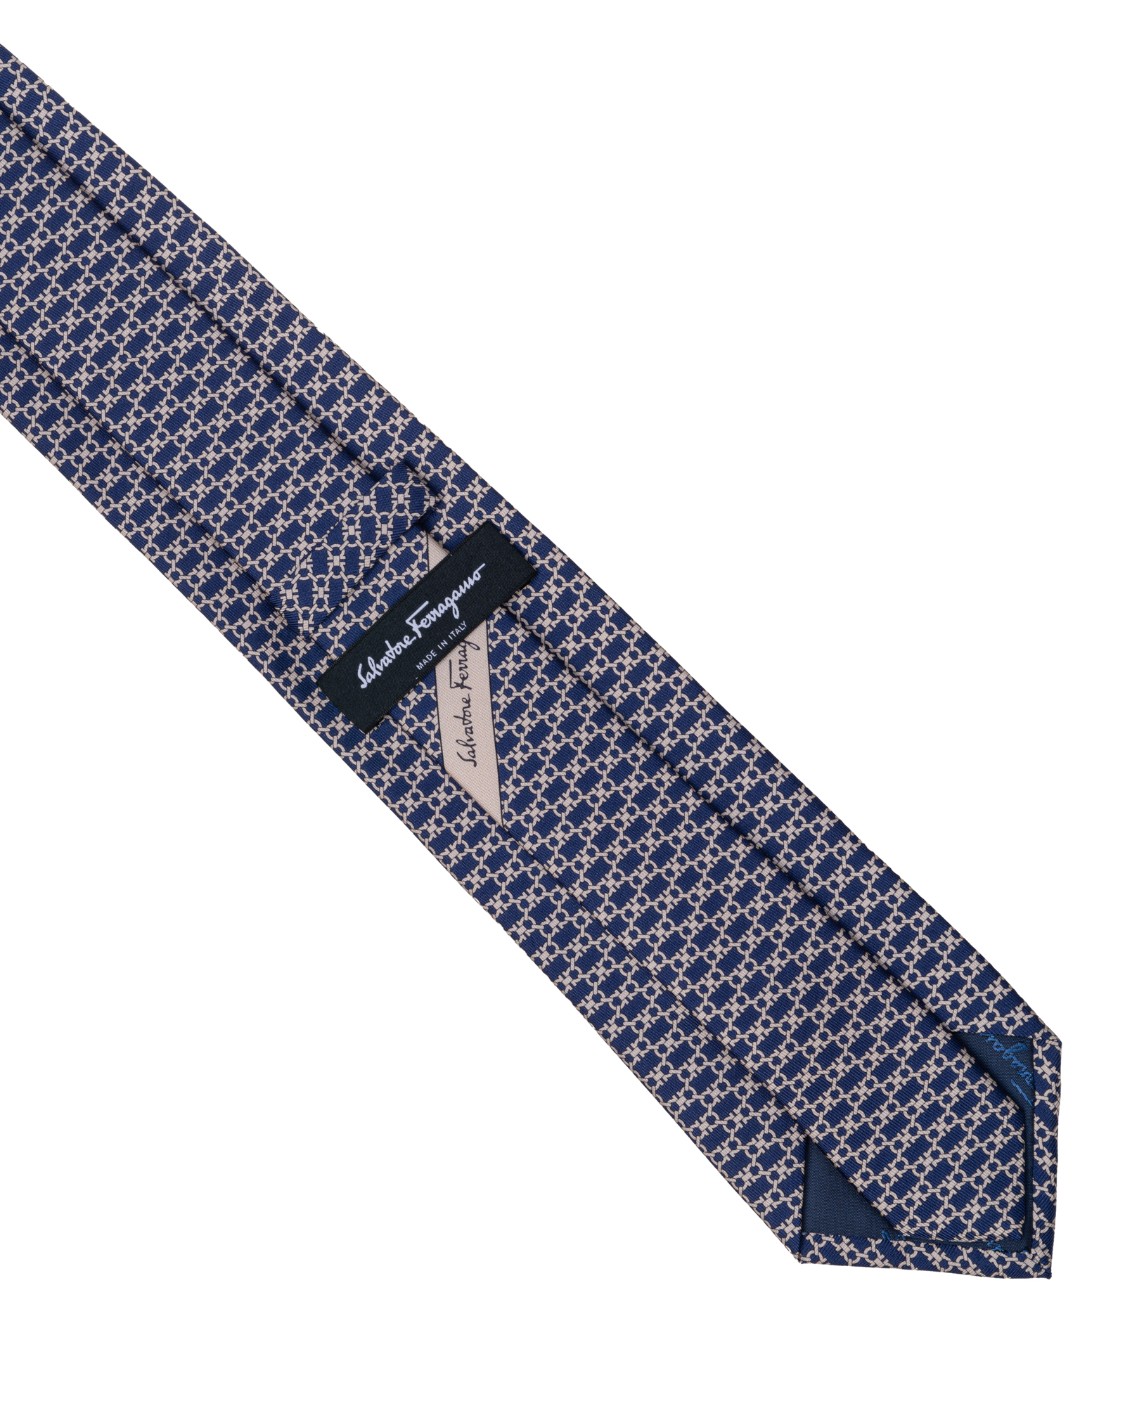 shop SALVATORE FERRAGAMO  Cravatta: Salvatore Ferragamo cravatta in seta con stampa Nobile.
Composizione: 100% seta.
Made in Italy.. 350409 4NOBILE-001740191 number 4851465